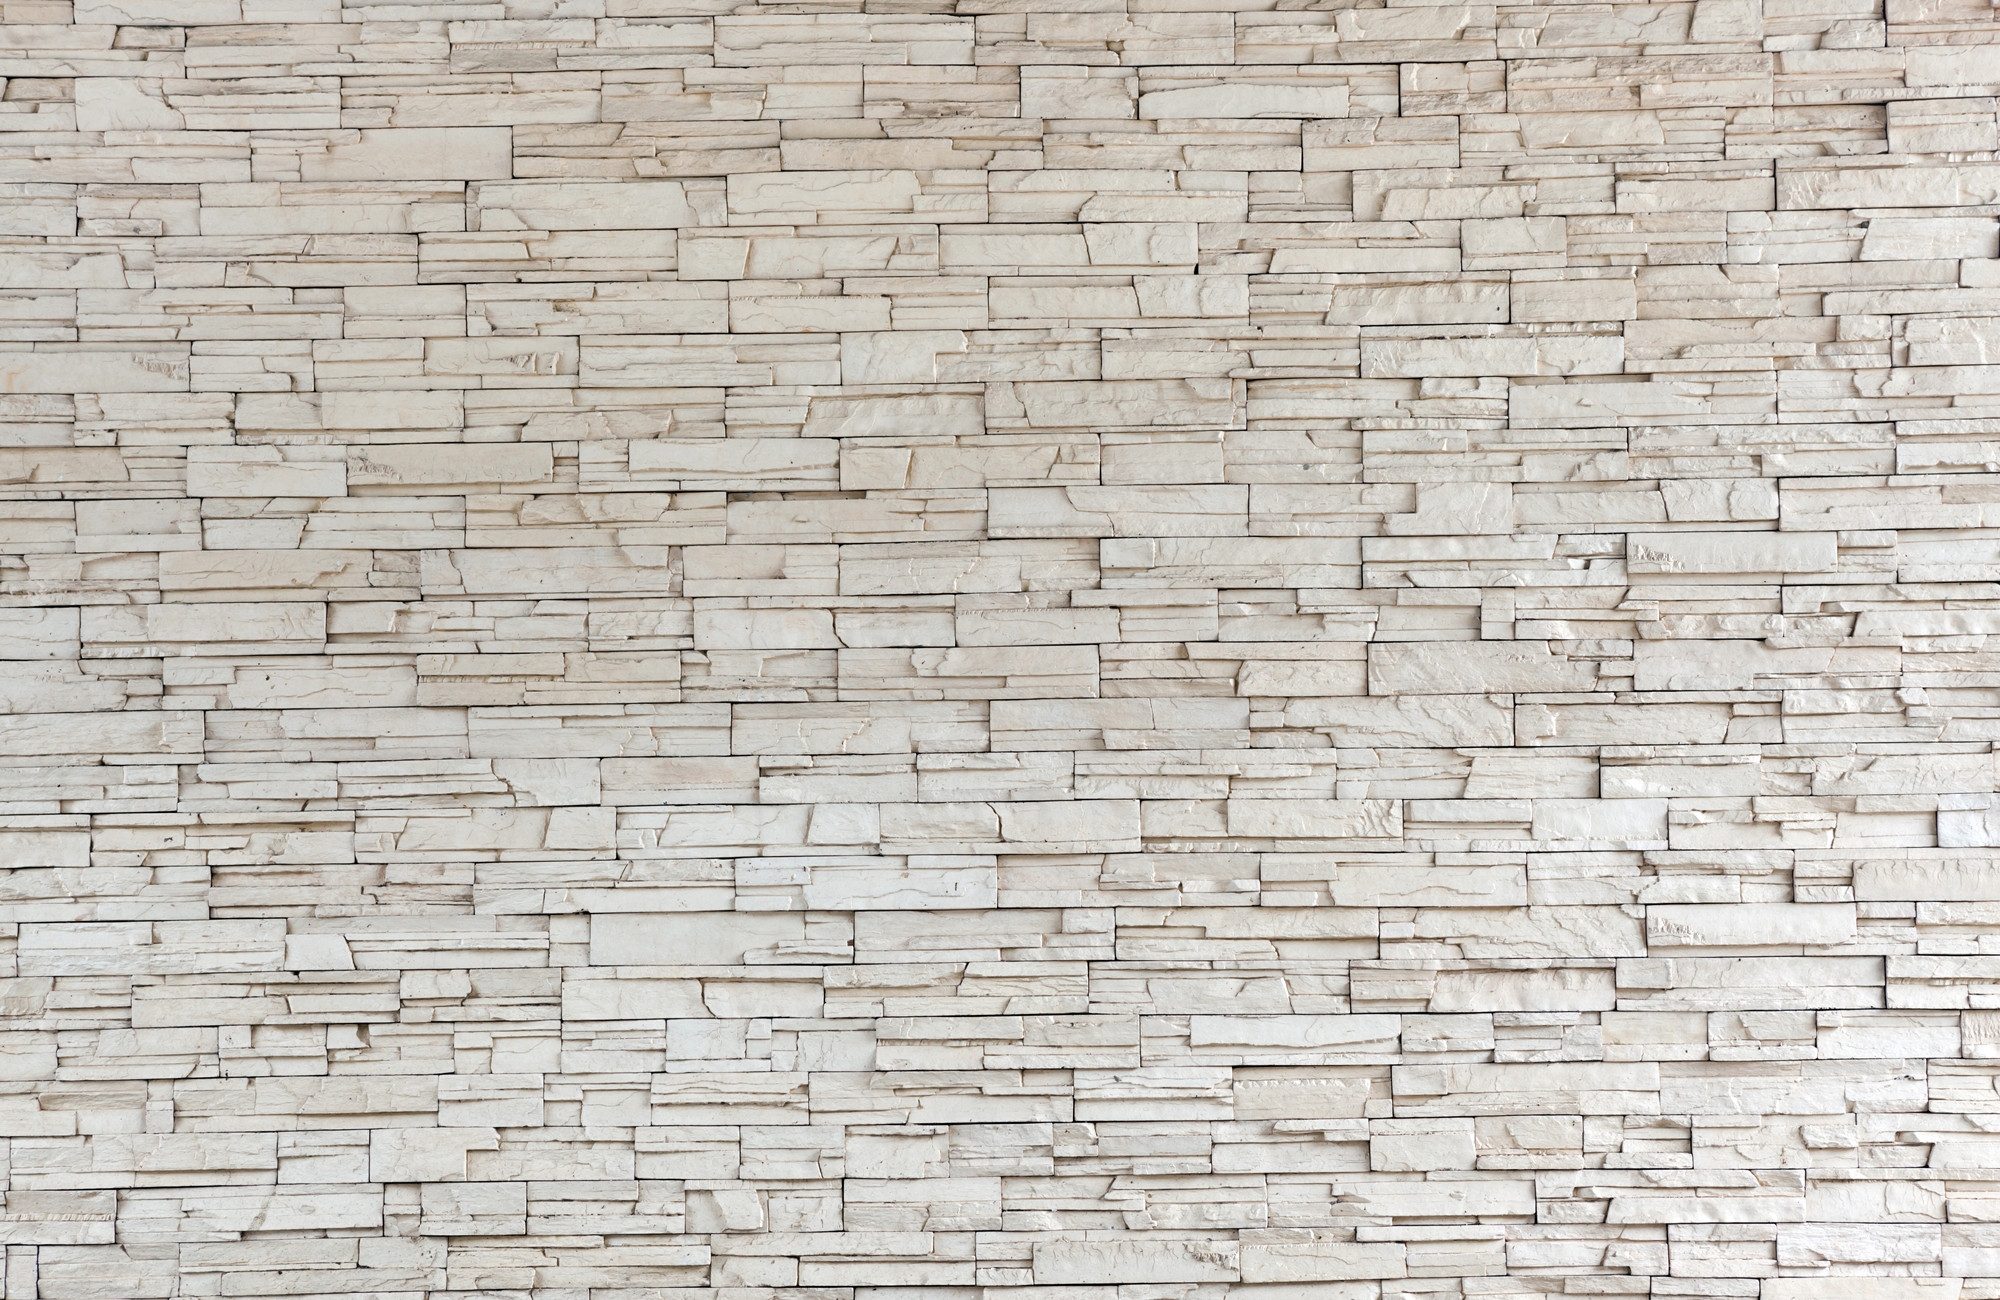 Papermoon Fototapete "NEU" PREMIUM-VLIES-Tapete, leicht strukturiert, Seidenmatt, restlos trocken abziehbar, (komplett Set inkl. Обоиkleister, 5658), Stone wall